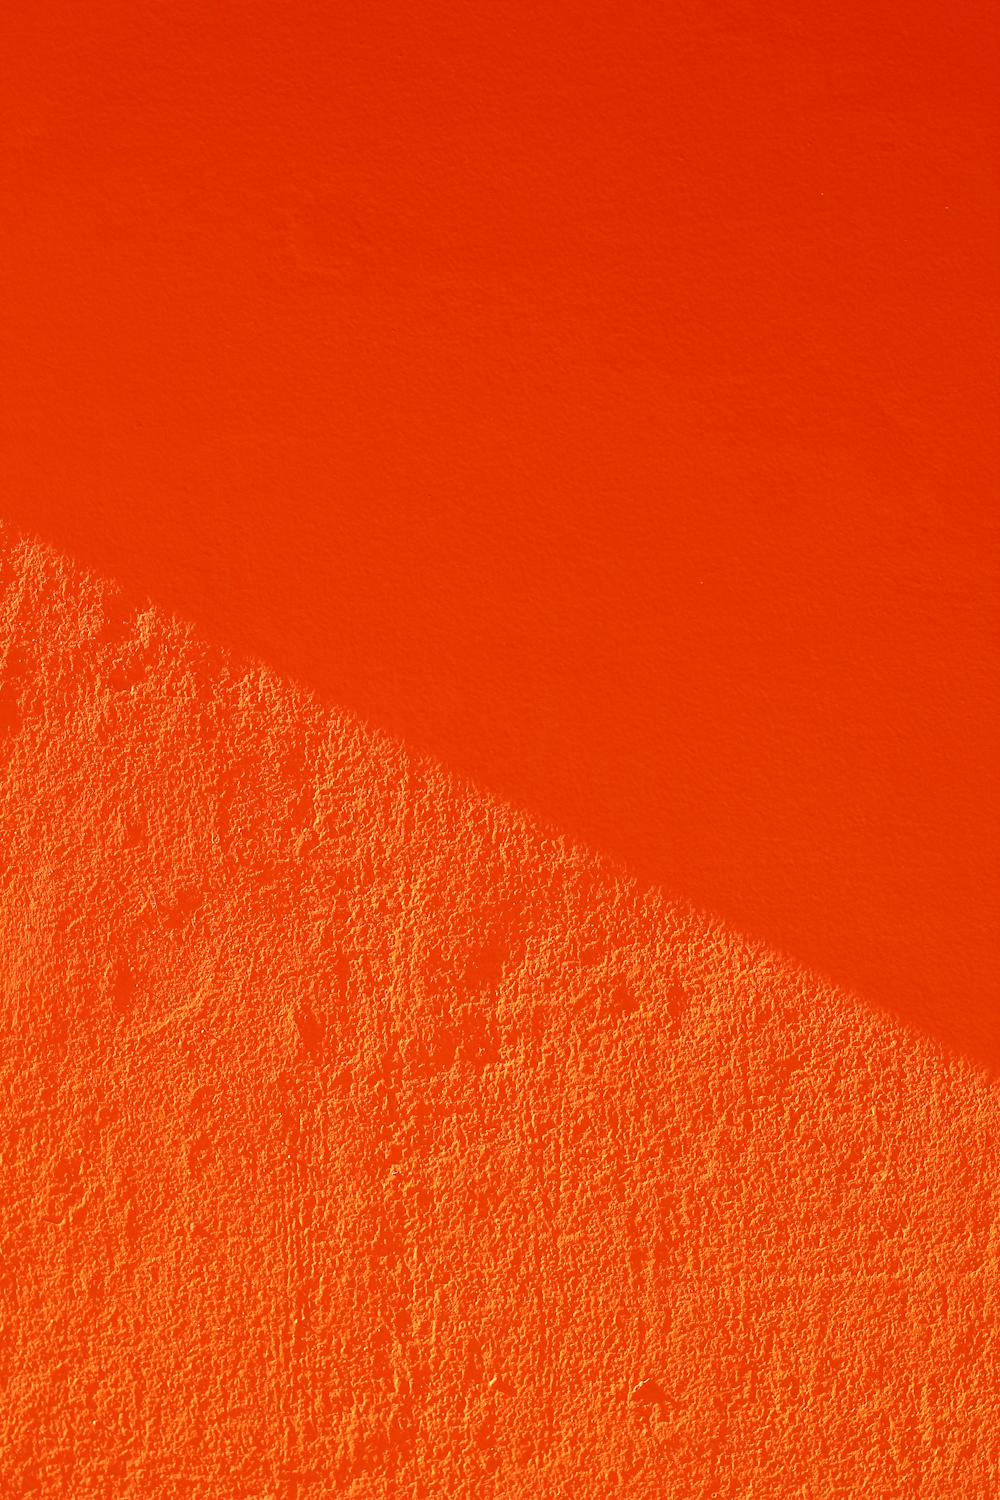 550 Orange Background Pictures Download Free Images On Unsplash